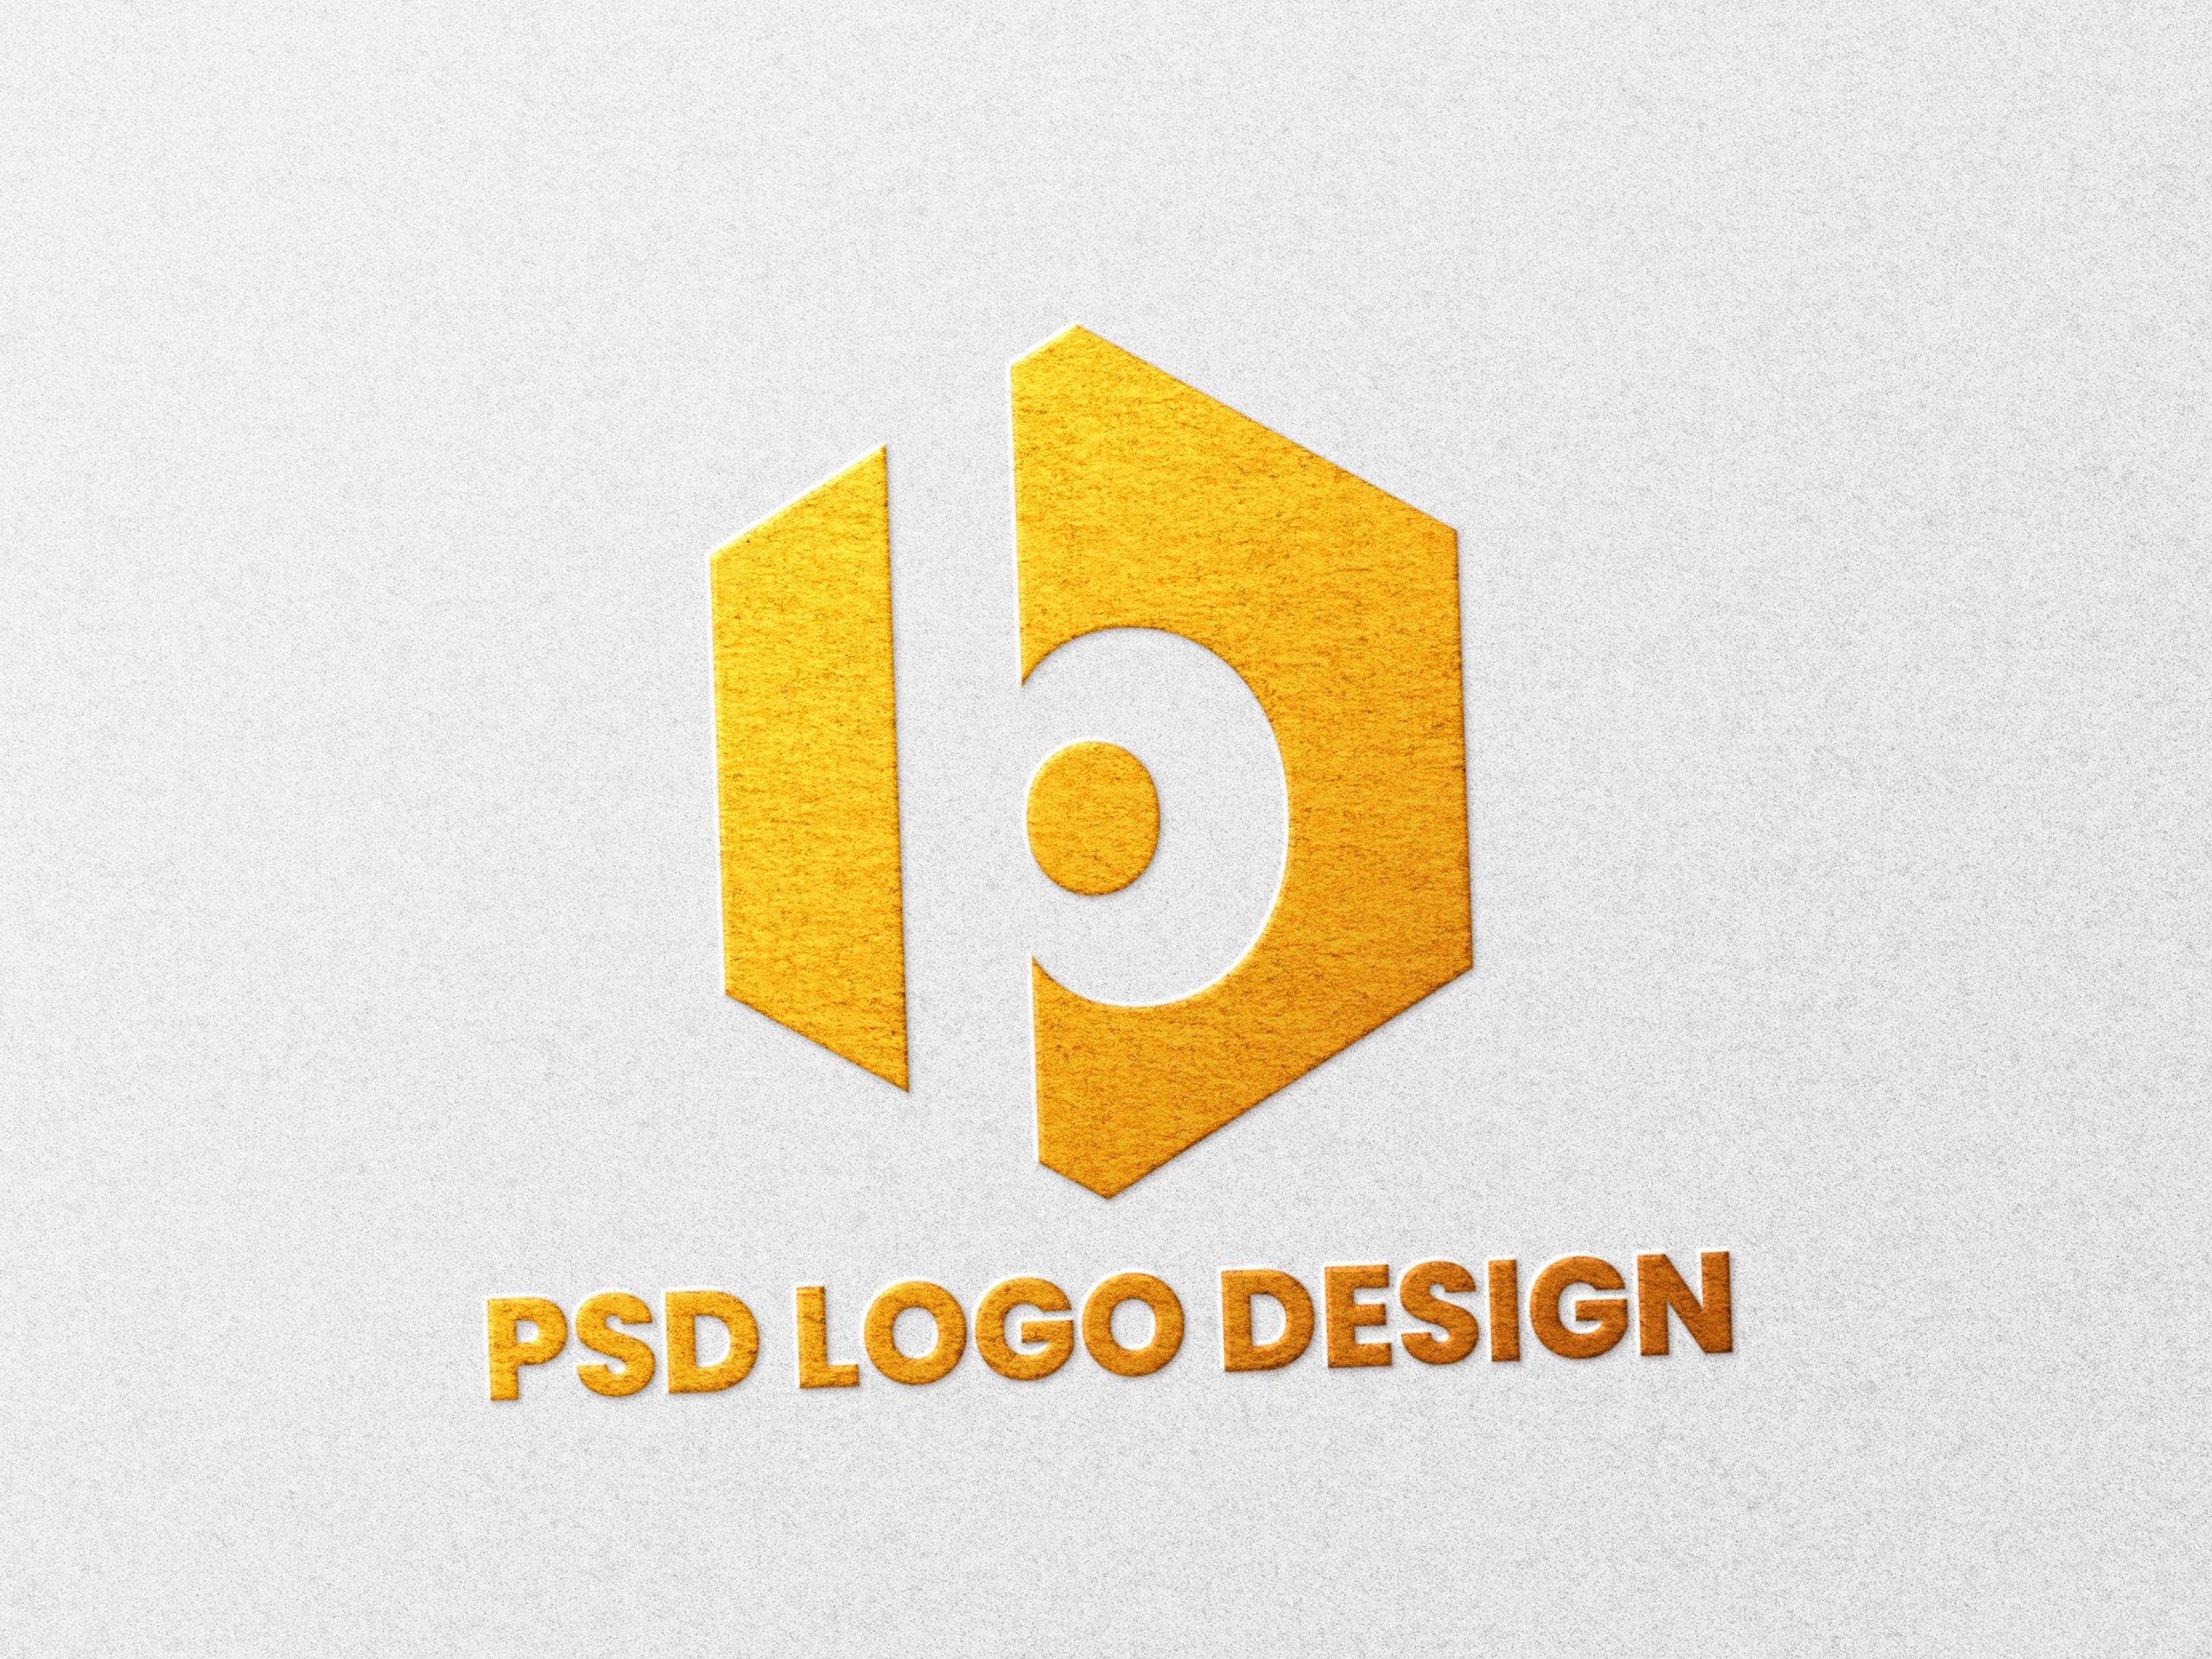 Psd 3d logo design free download